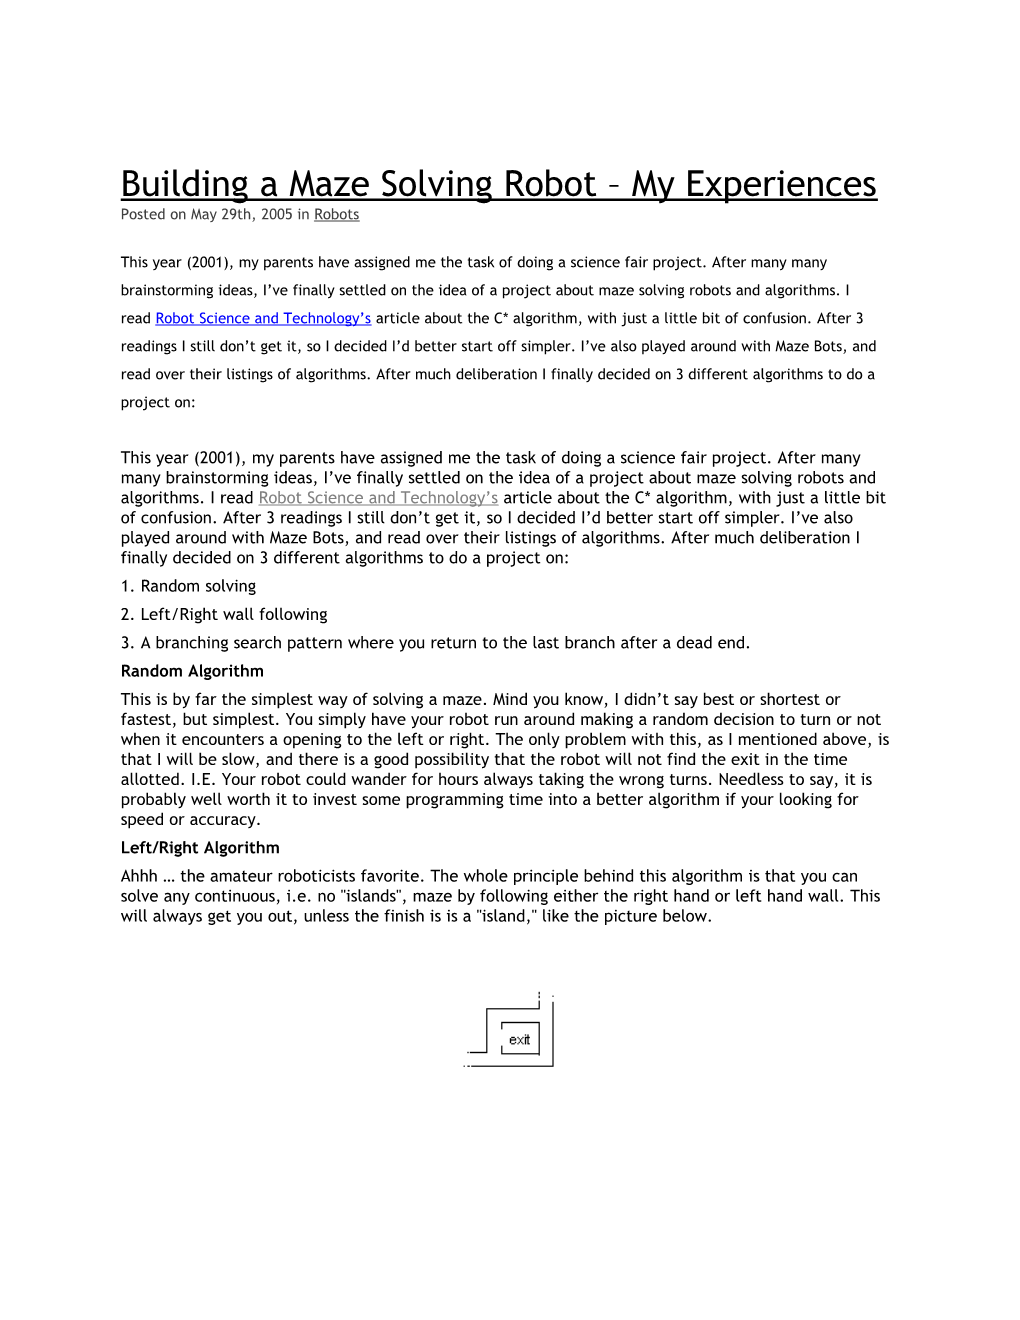 Building a Maze Solving Robot My Experiences